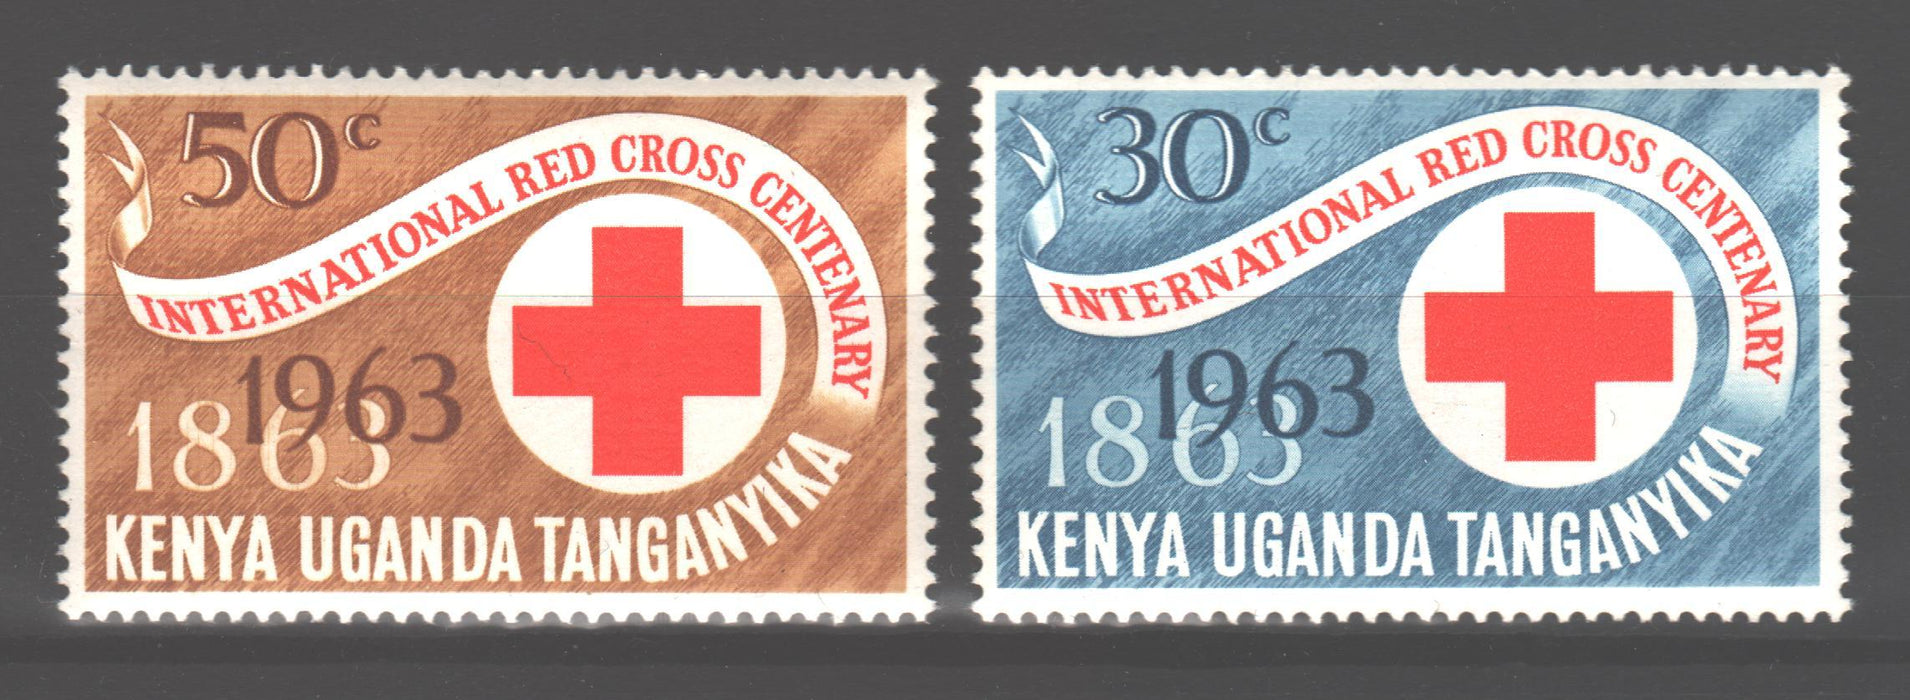 Kenya Uganda Tanganyika 1963 Red Cross Centenary Issue Scott #142-143 c.v. 2.75$ - (TIP A) in Stamps Mall